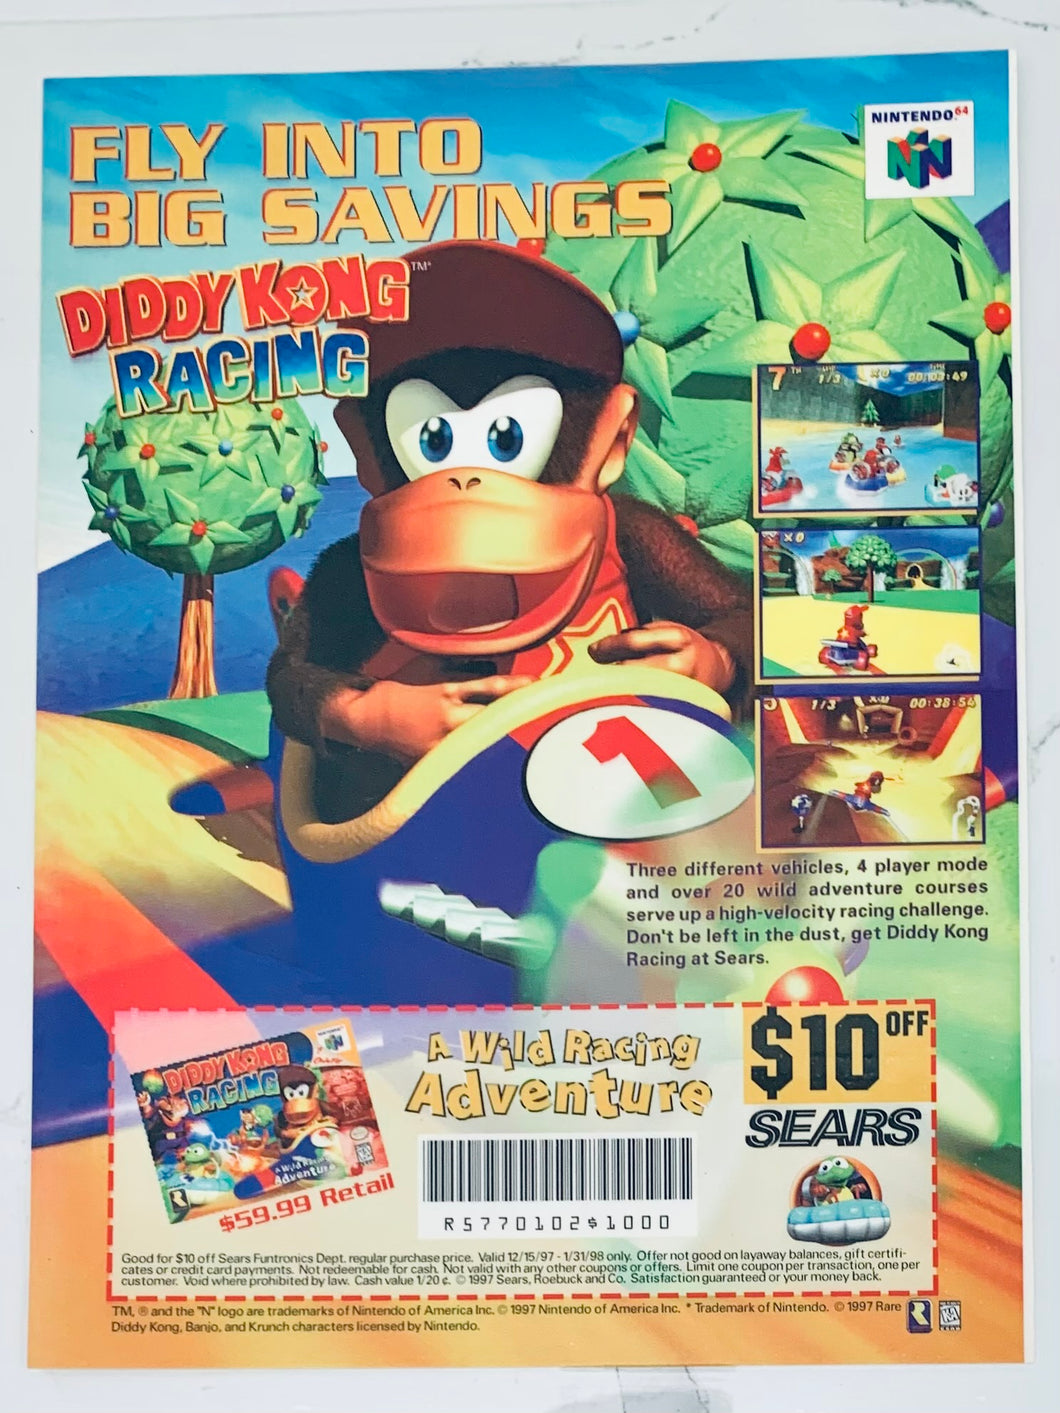 Diddy Kong Racing - N64 - Original Vintage Advertisement - Print Ads - Laminated A4 Poster